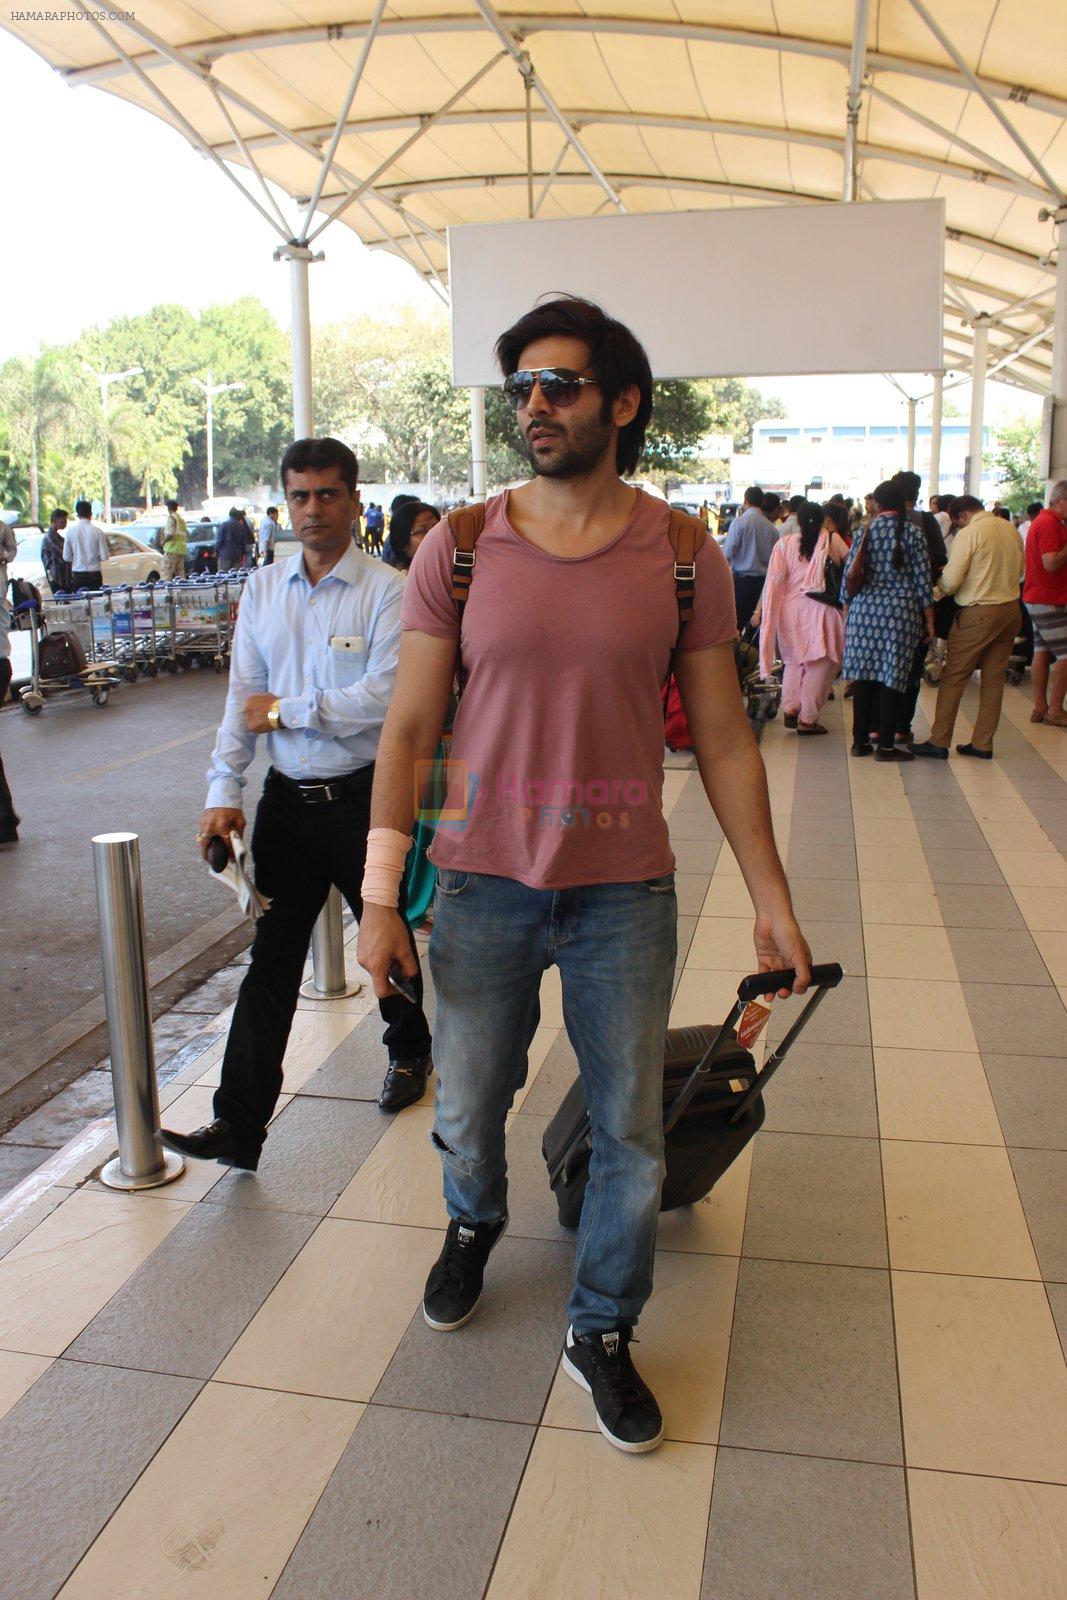 Karthik Arya snapped at the airport in Mumbai on 26th Feb 2016